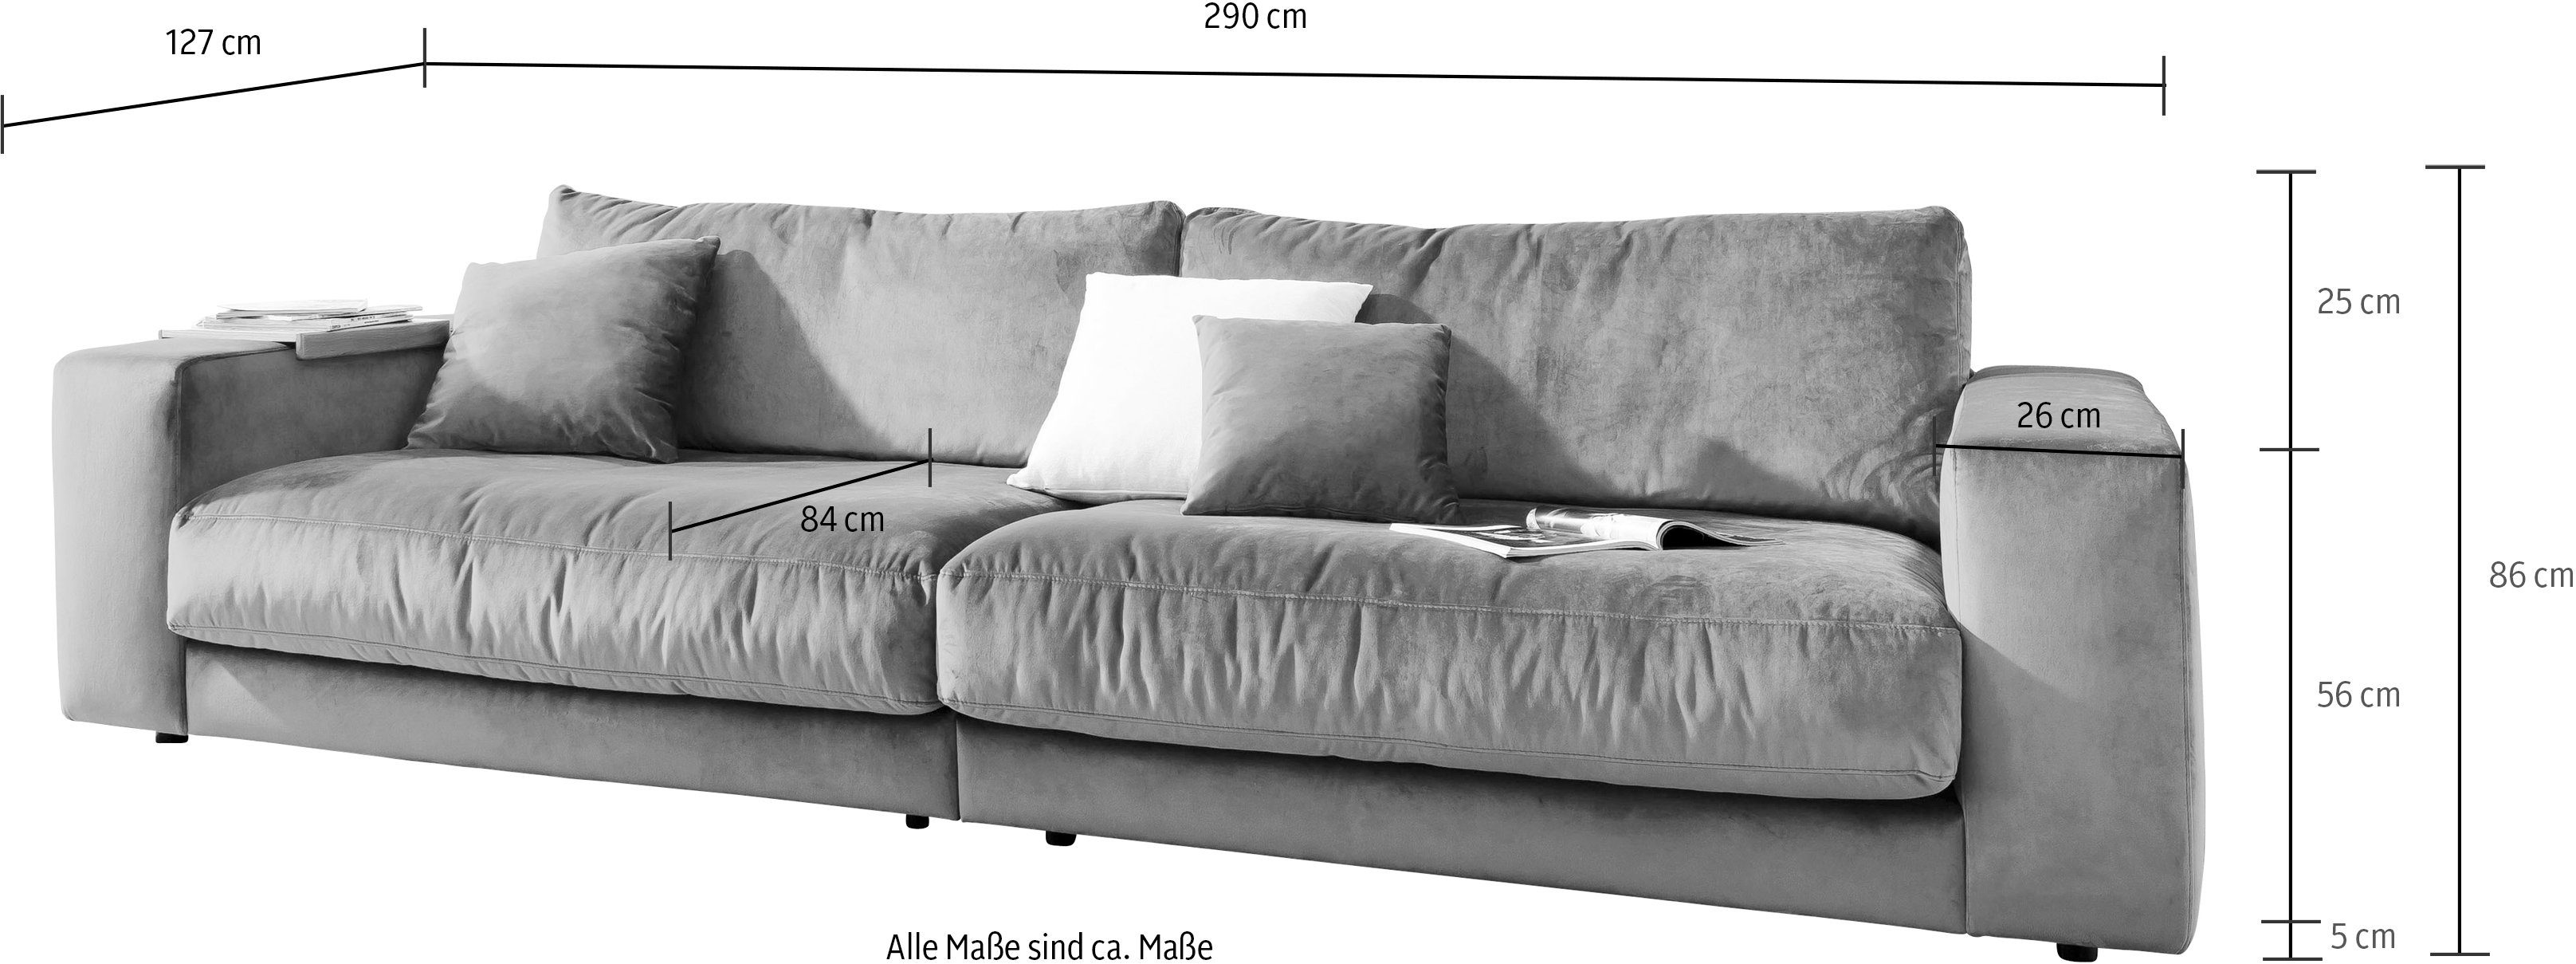 3C Candy Big-Sofa Enisa incl. II, Easy Flecken-Schutz-Bezug mit Wahlweise Flatterkissen, care 1